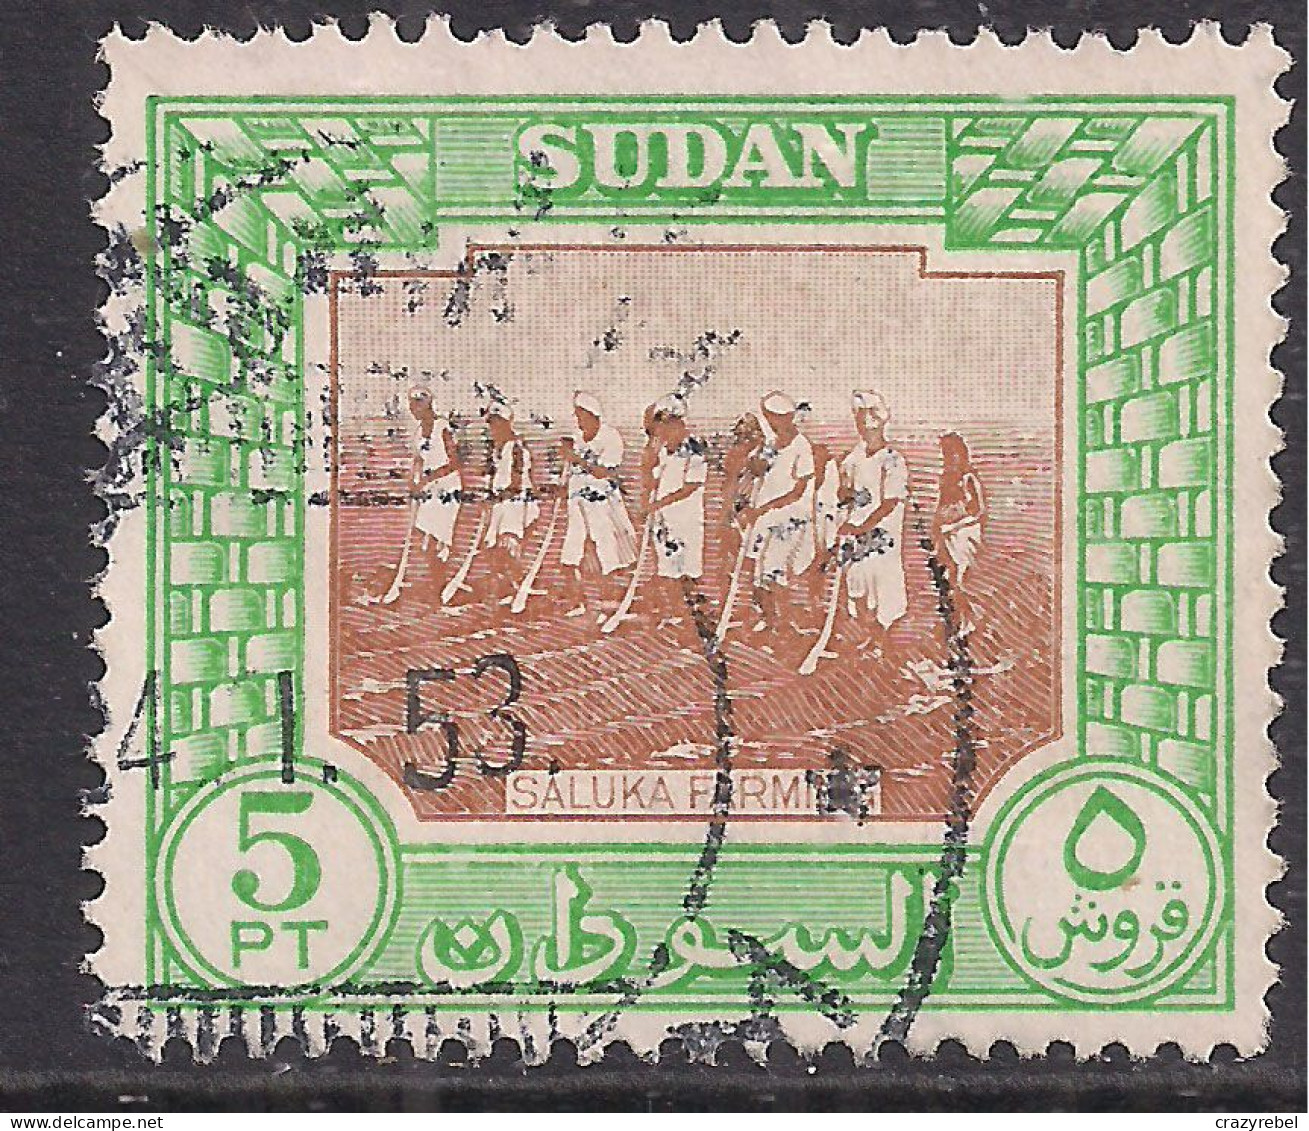 Sudan 1951 KGV1 5pt Saluka Farming Used SG 134 ( D409 ) - Sudan (...-1951)